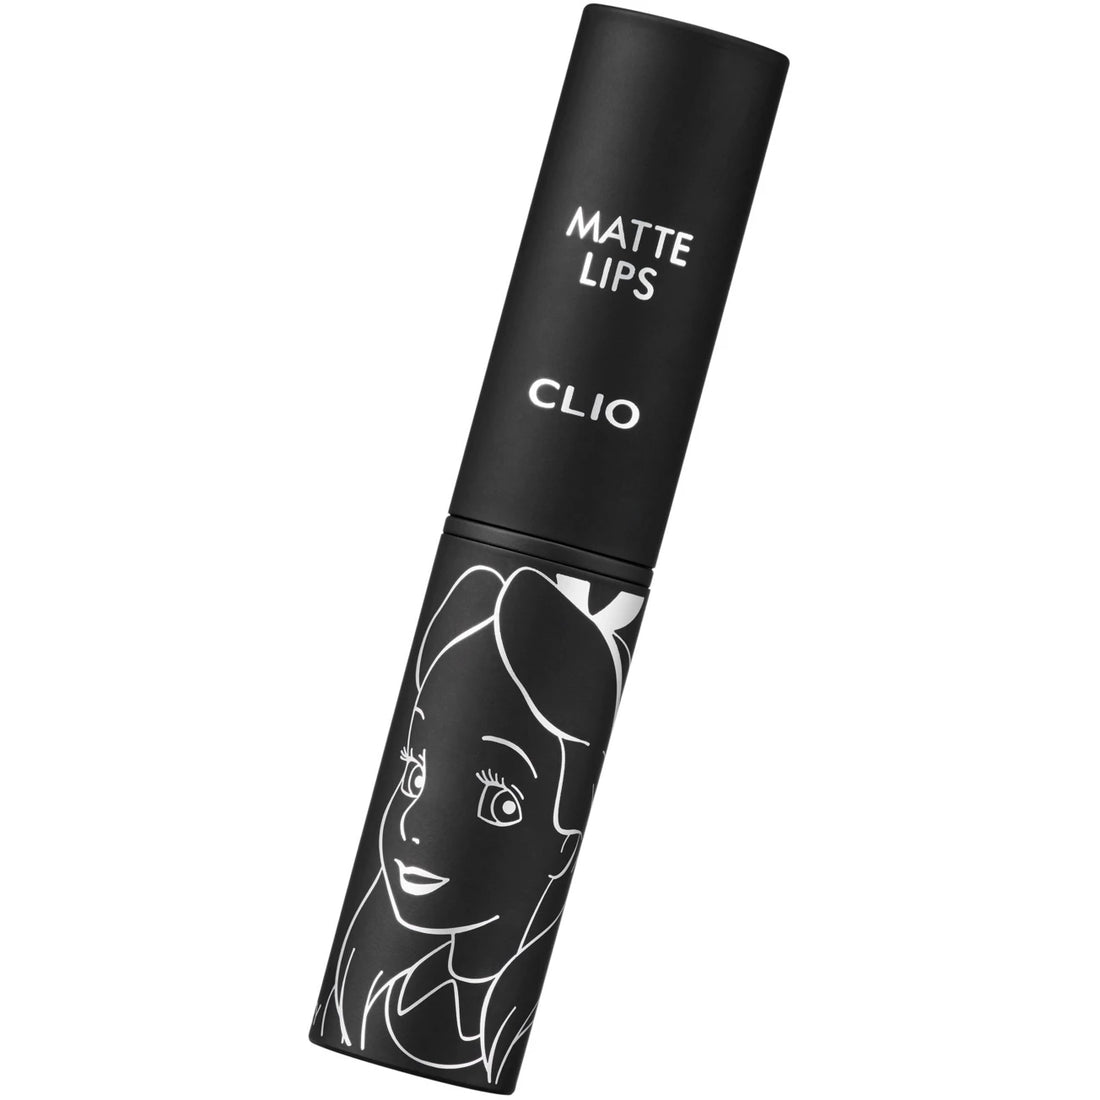 日本迪士尼 Disney x Clio Alice Matte Lipstick - 24 Rose Mare 愛麗絲唇膏